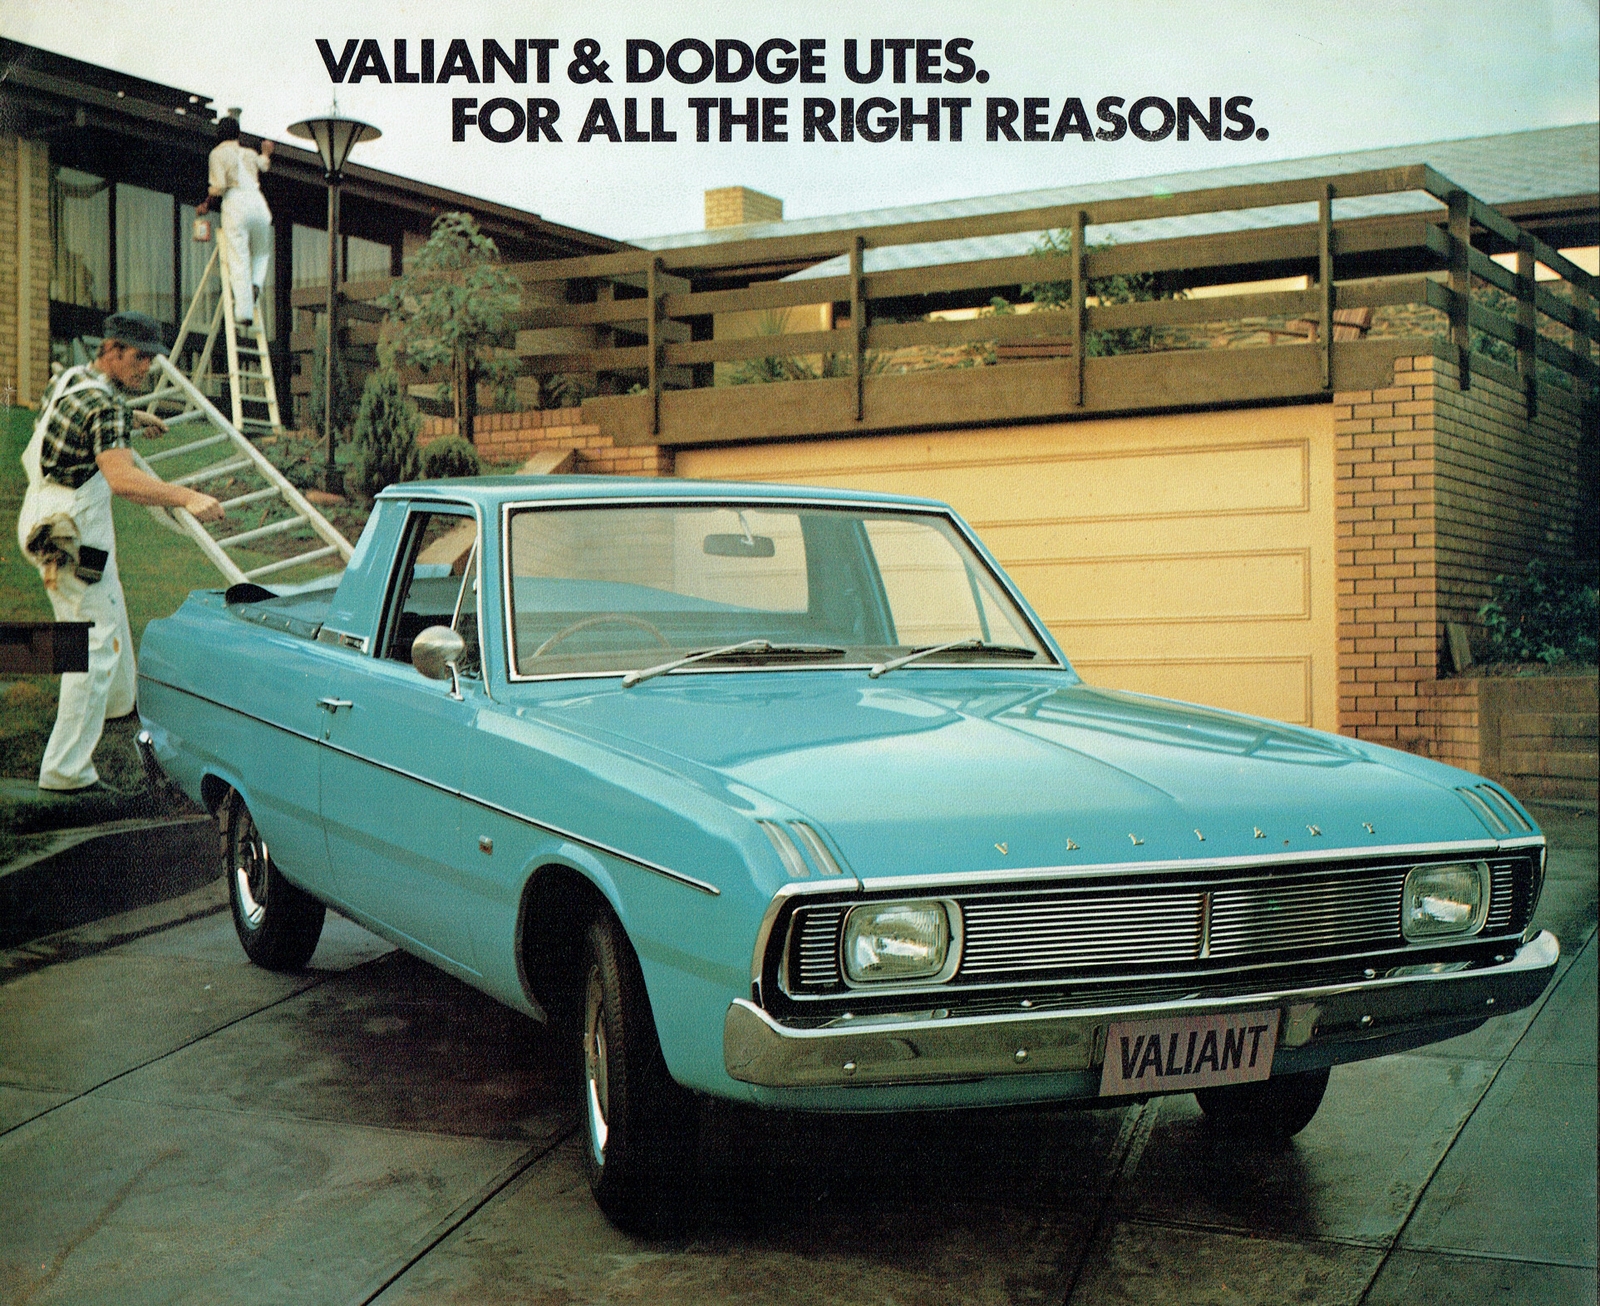 n_1970 VG Valiant & Dodge Ute-01.jpg